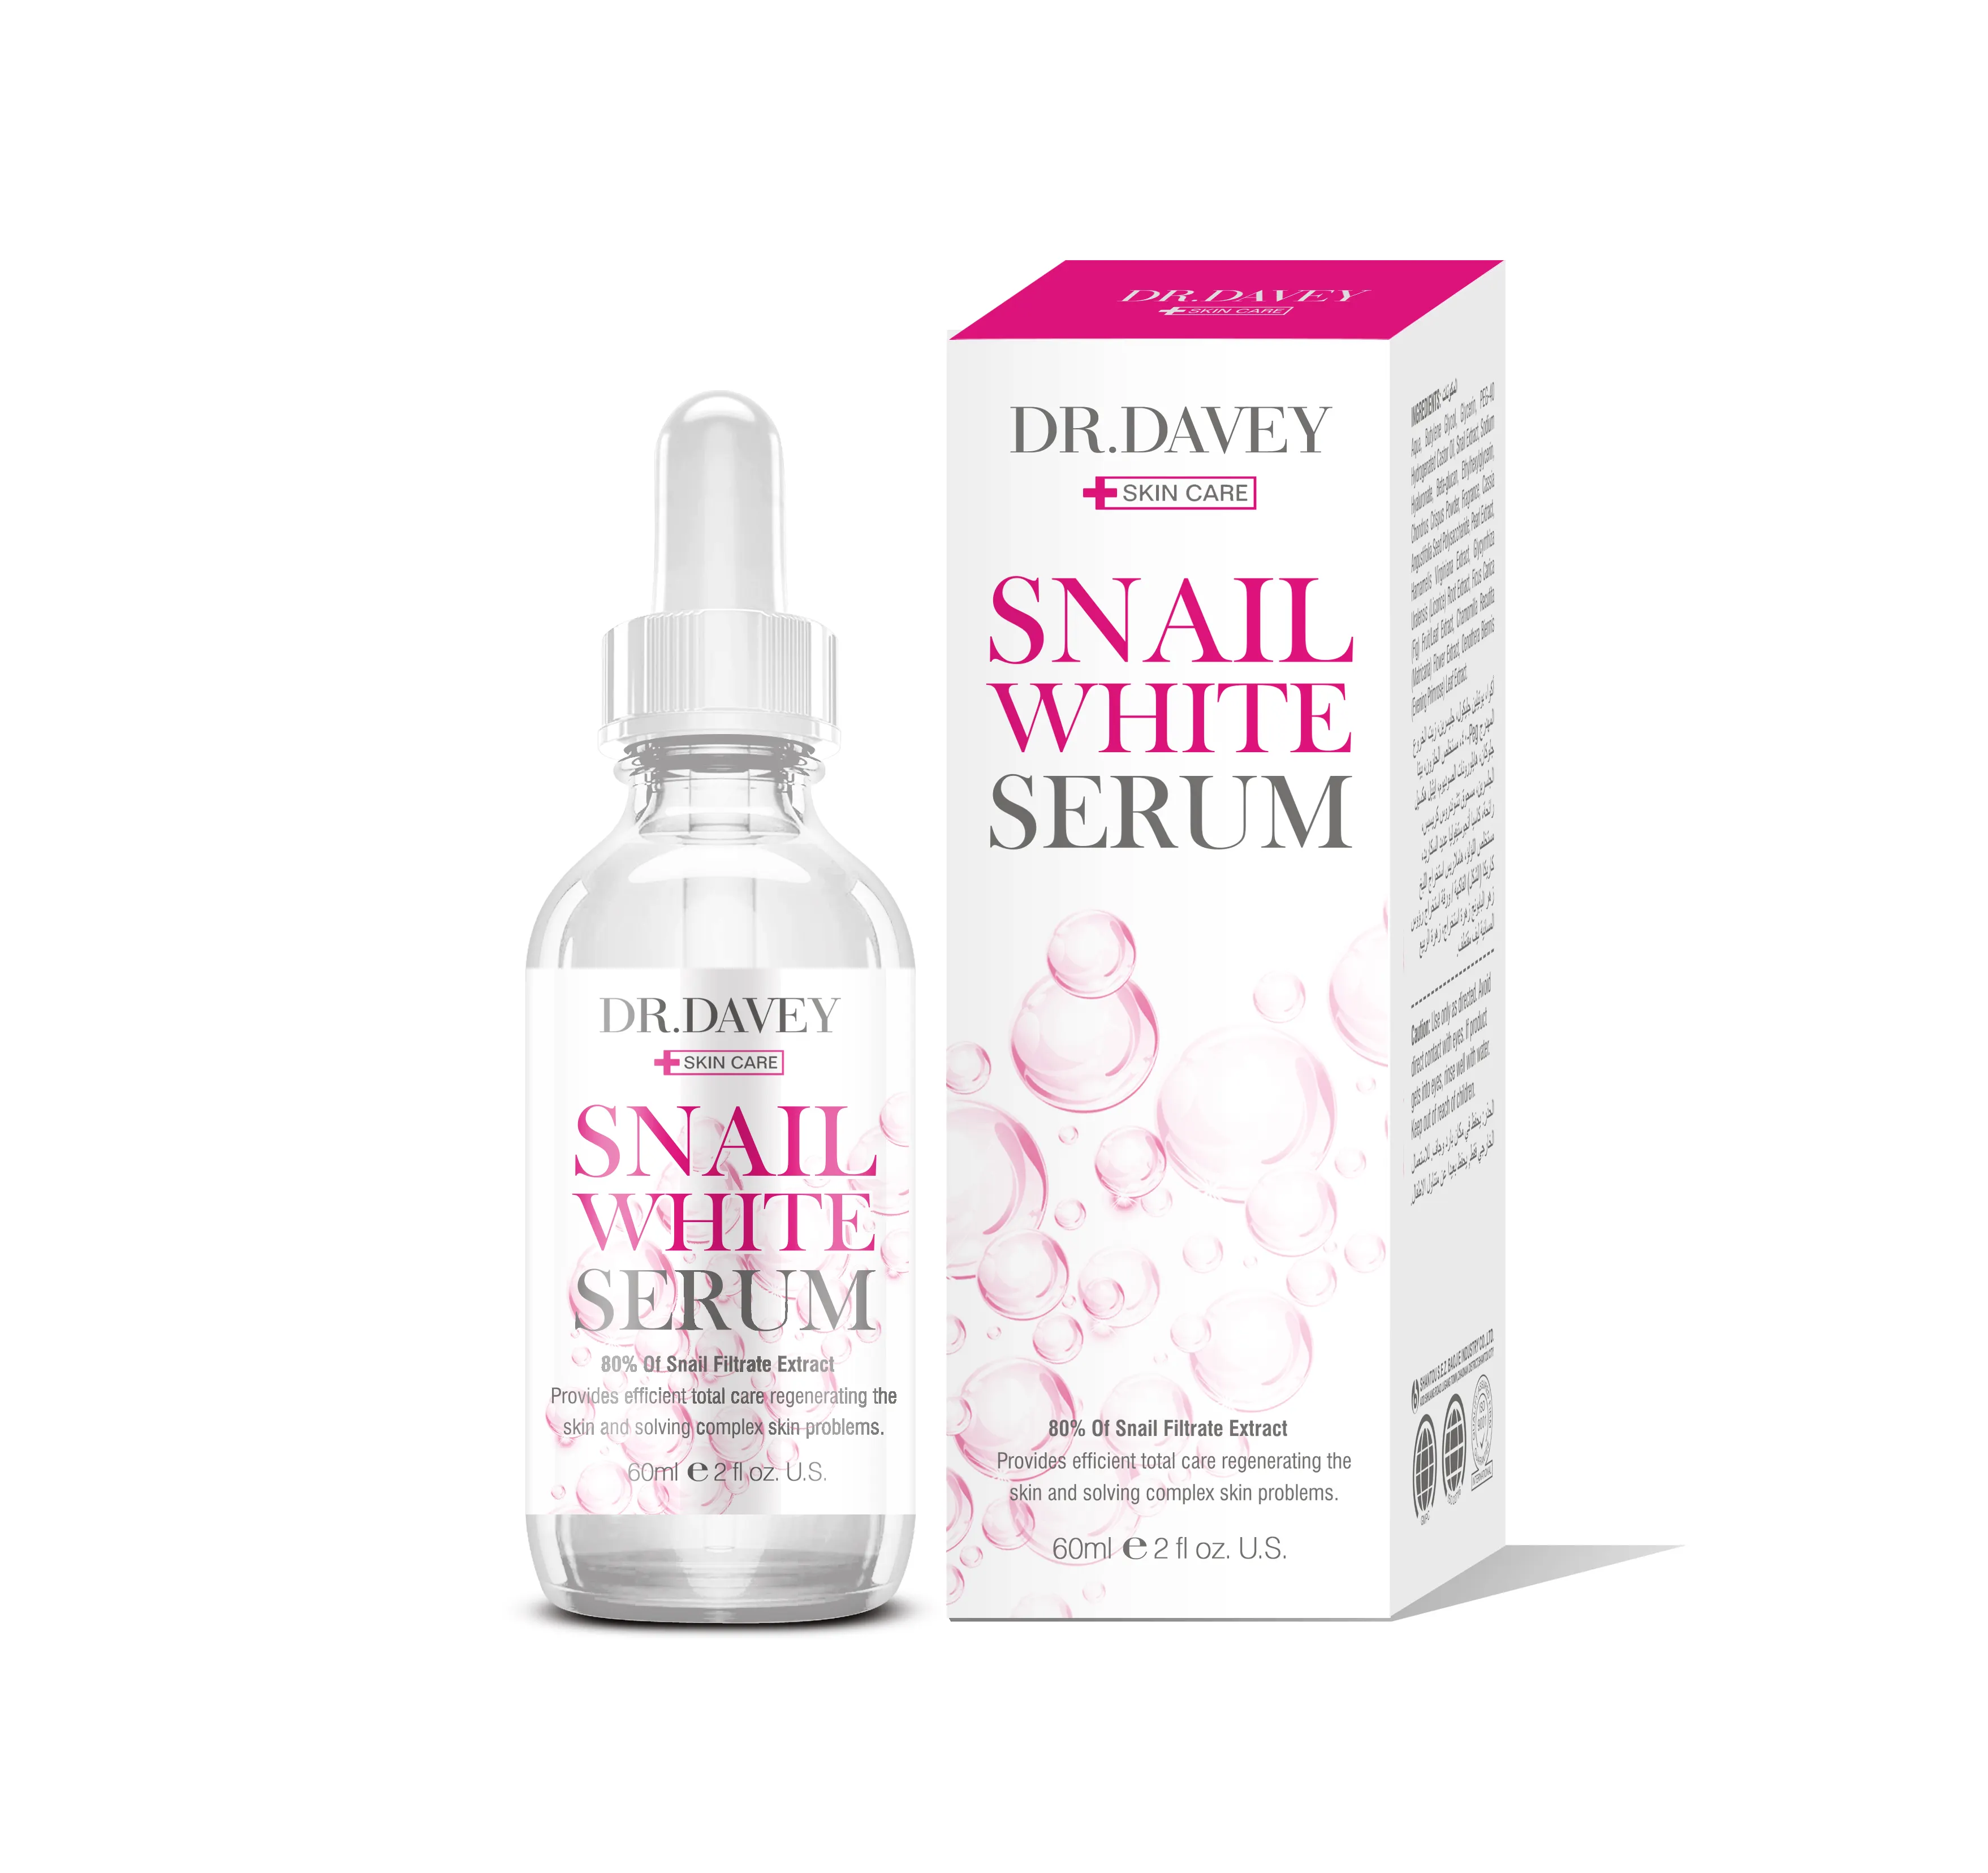 DR.DAVEY Snail Whitening Serum 80% O1 Snail Filtrate Extract Face Serum Facial Serum